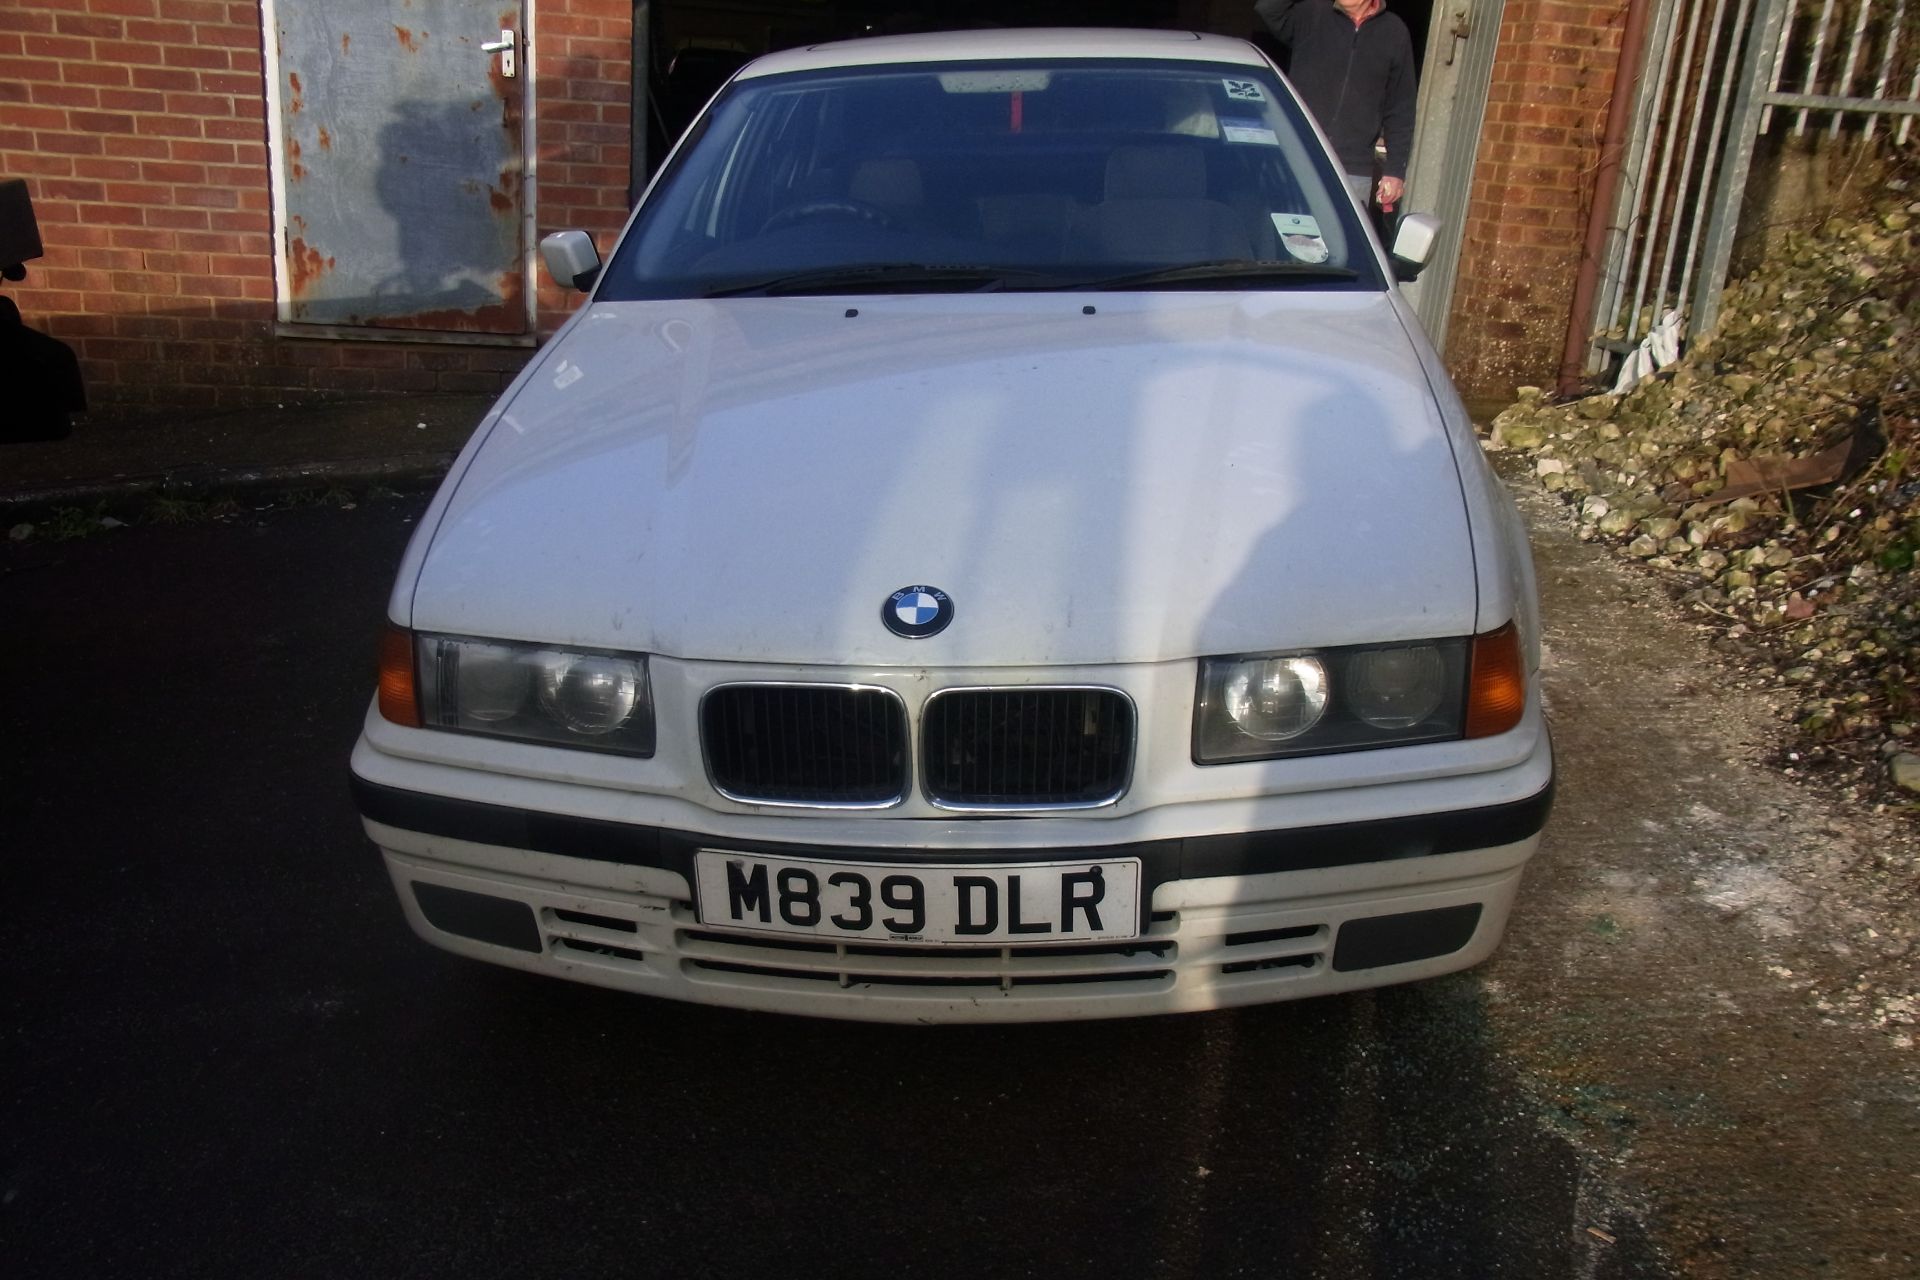 M839 DLR BMW 318i with V5